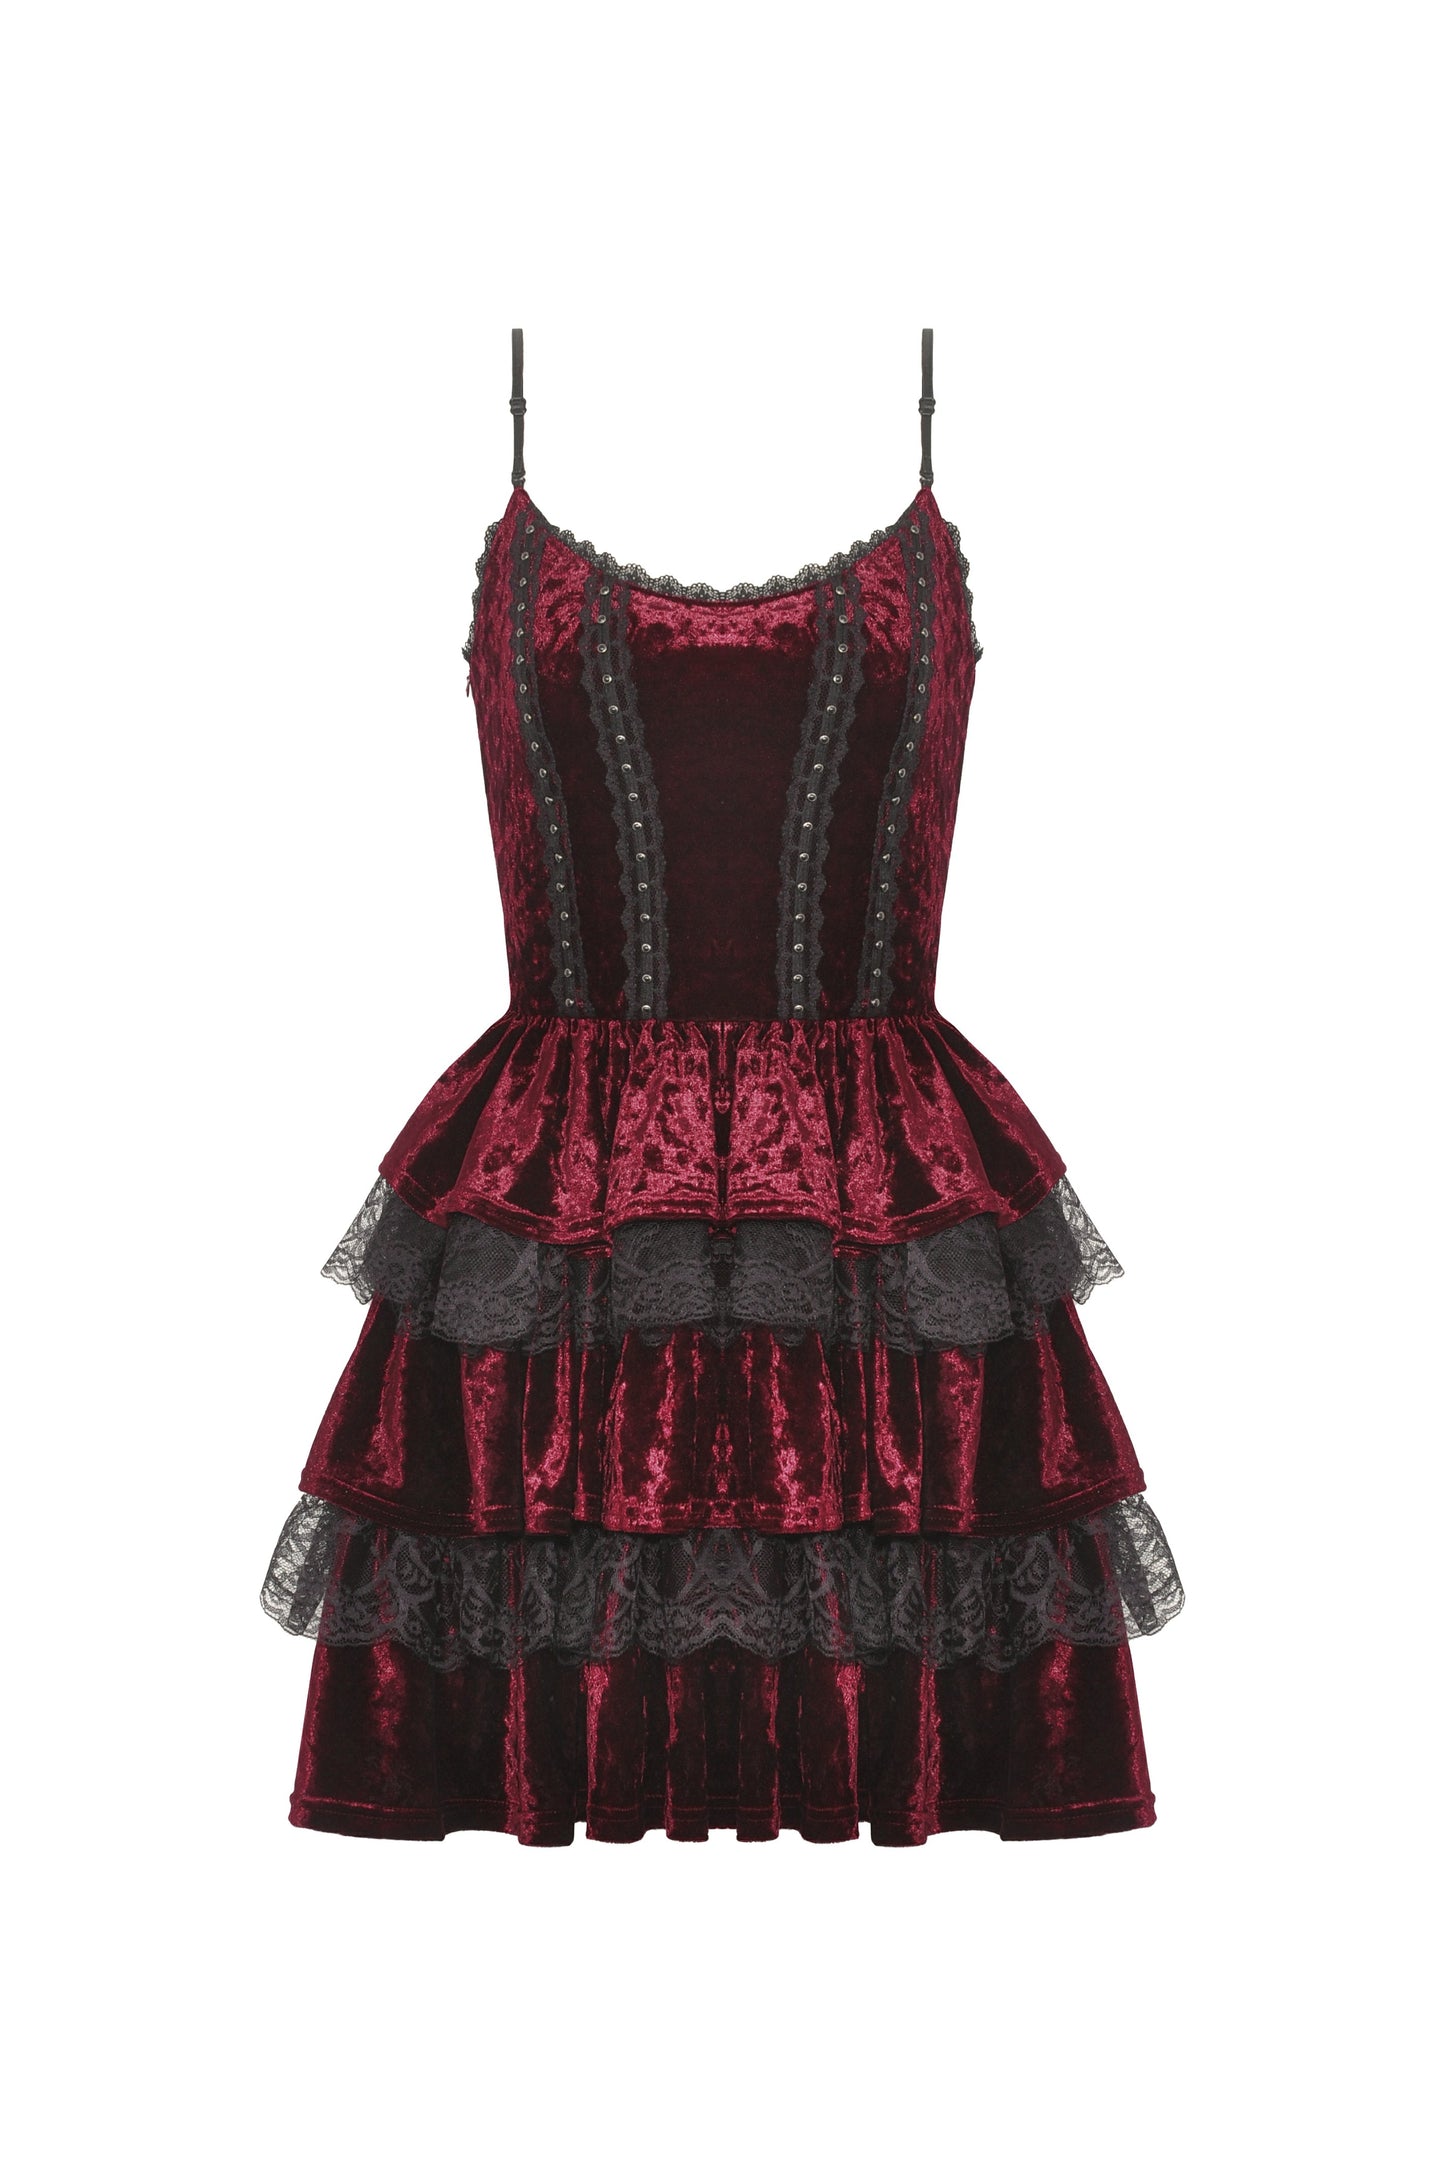 Bathing In Blood Gothic Red Velvet Frilly Dress by Dark In Love